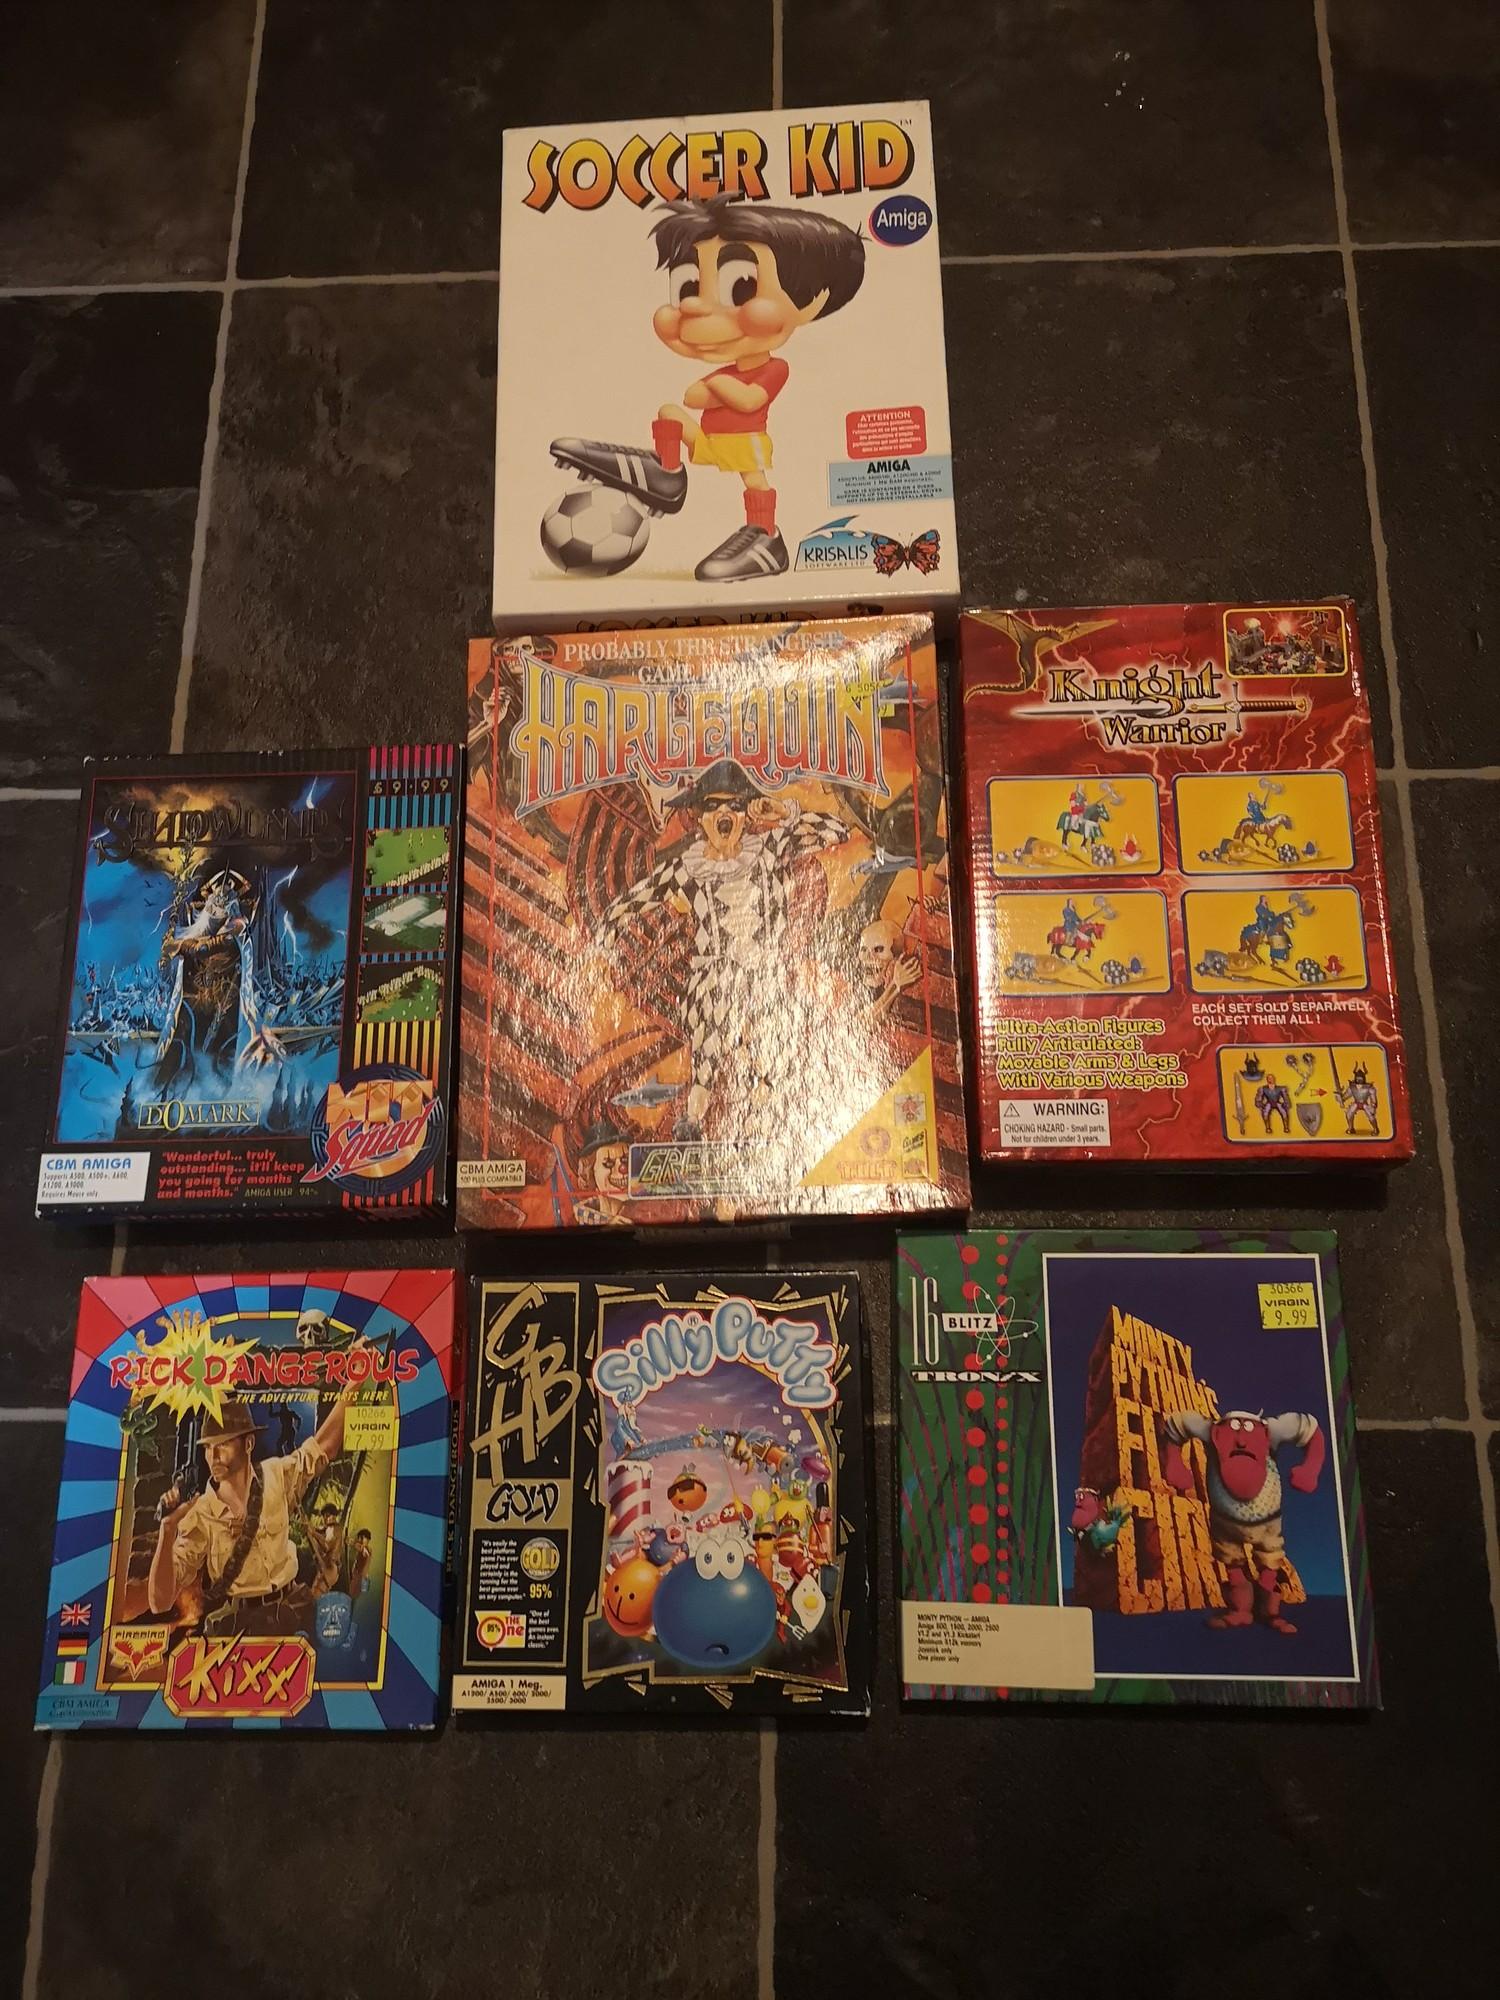 Lot of original amiga console games with original boxes.